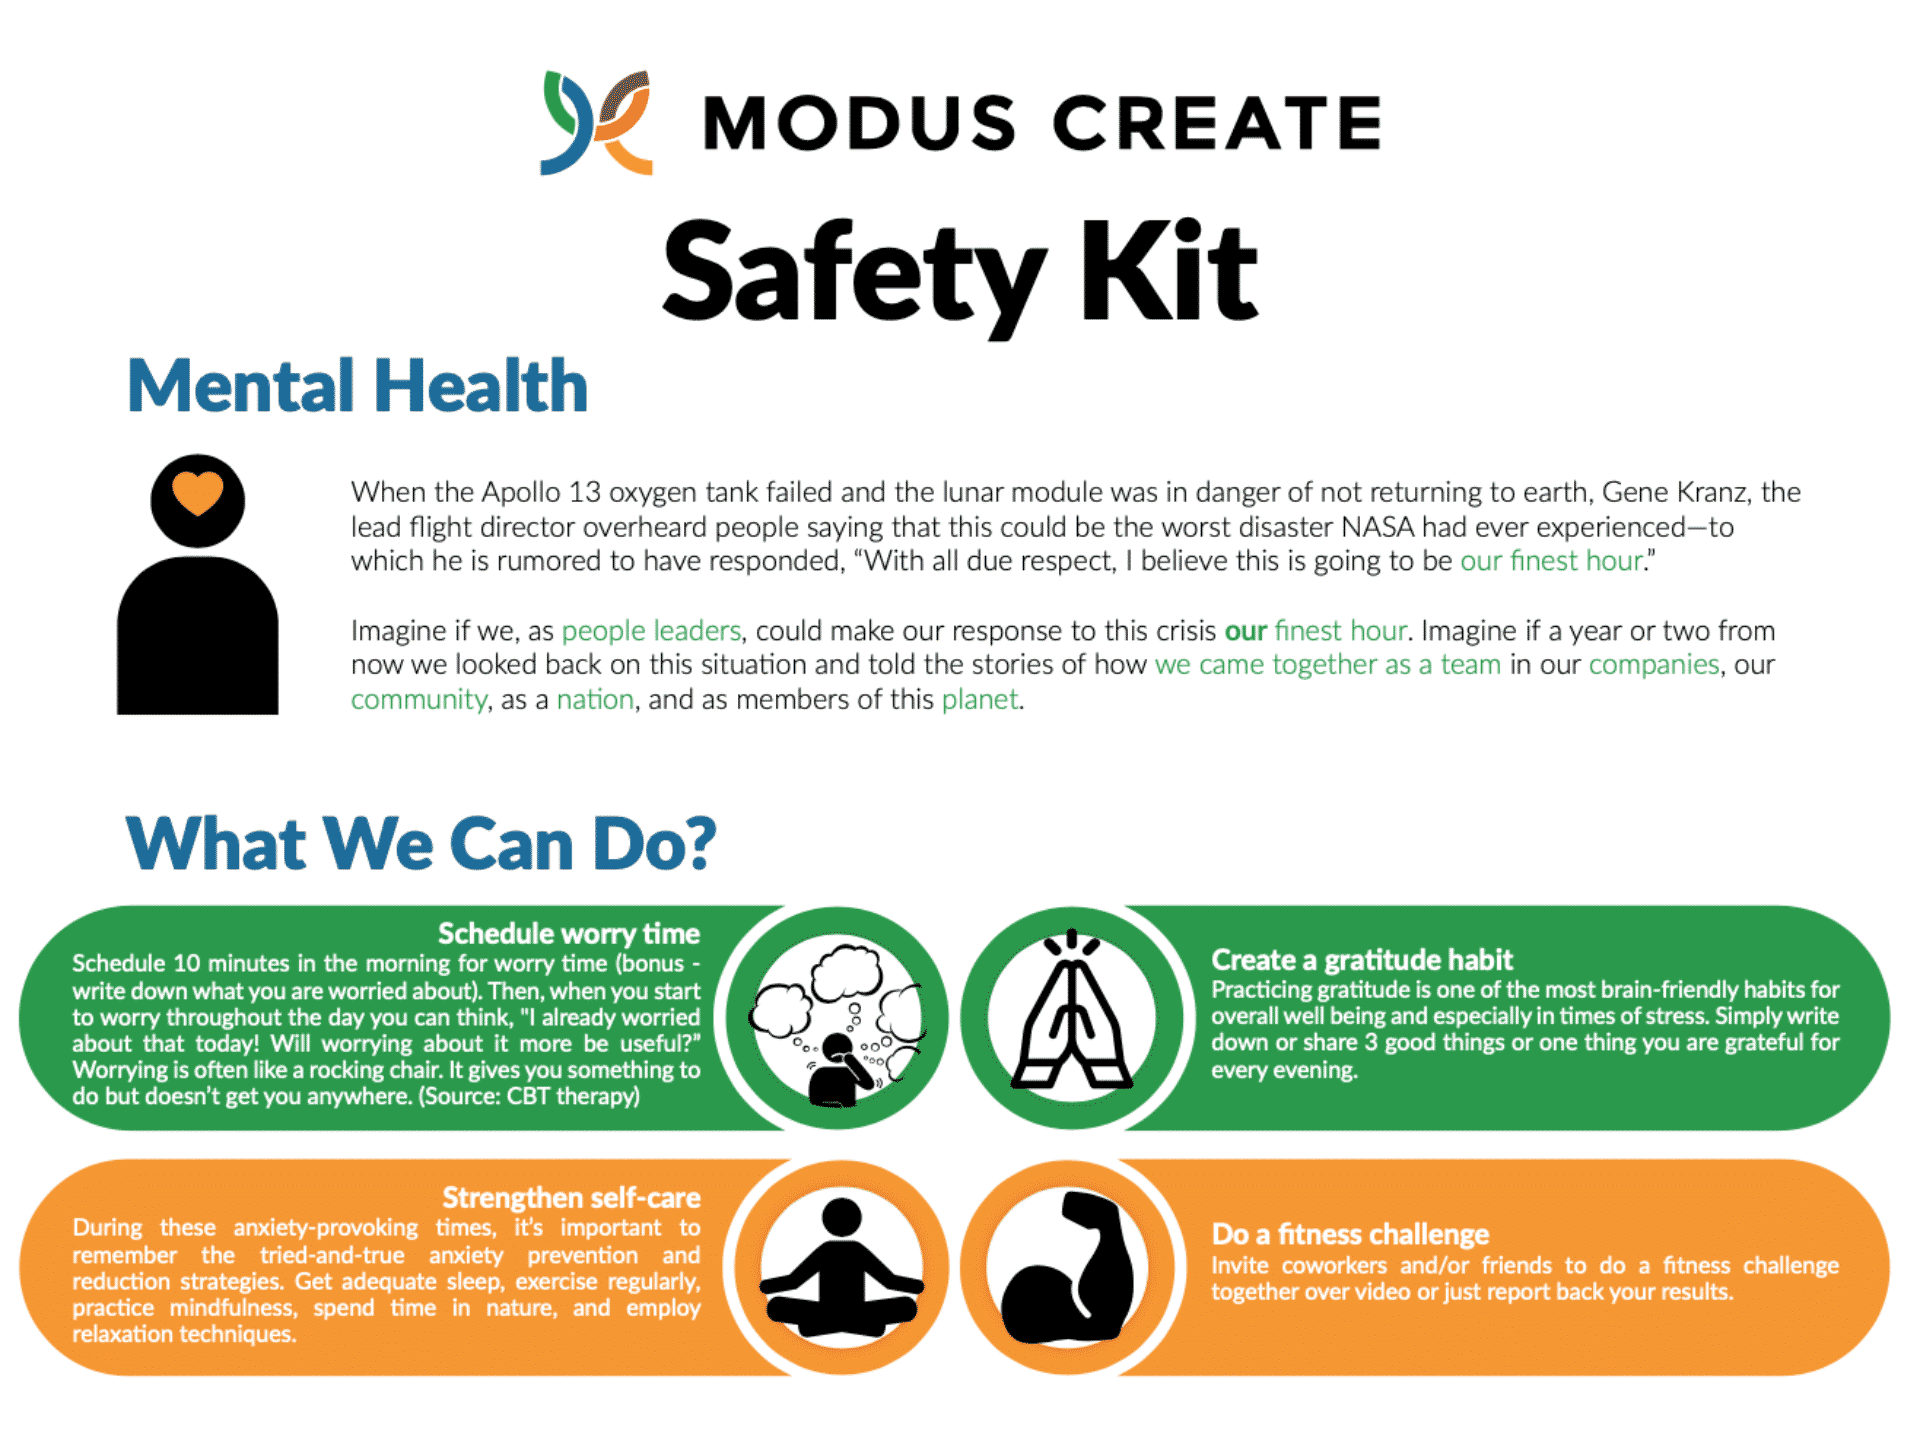 Modus Create Safety Kit